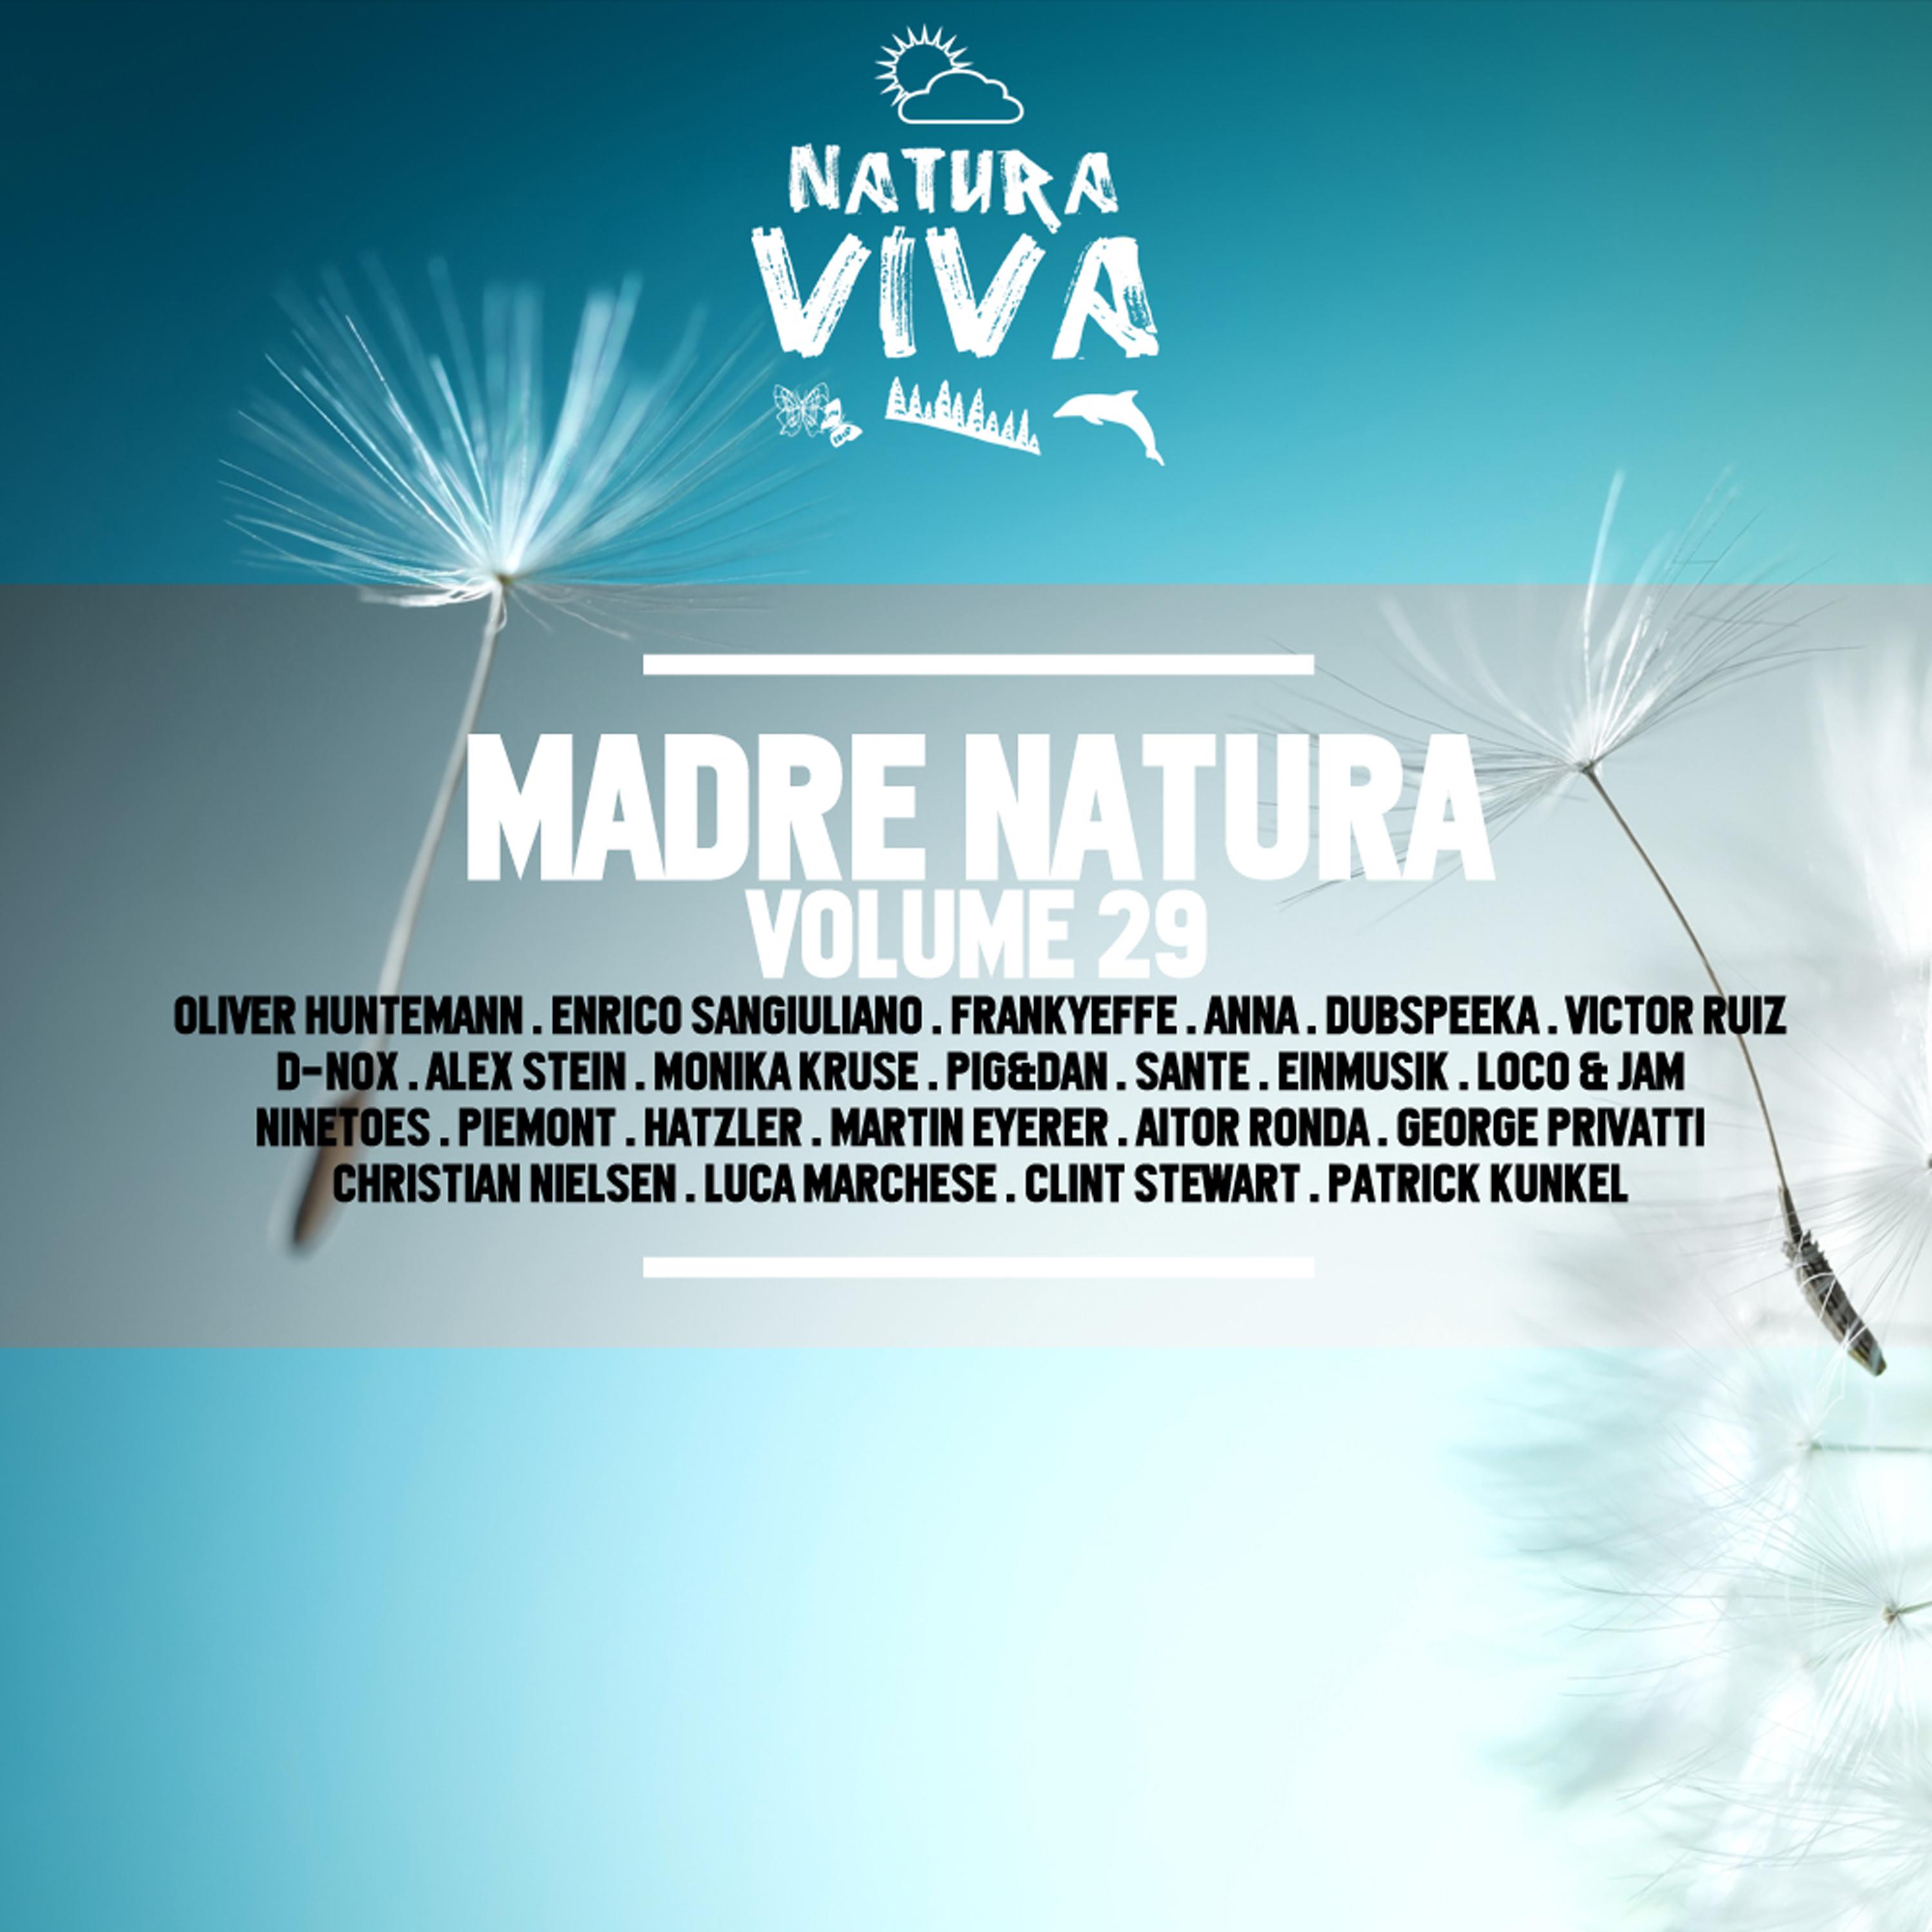 Madre natura, Vol. 29